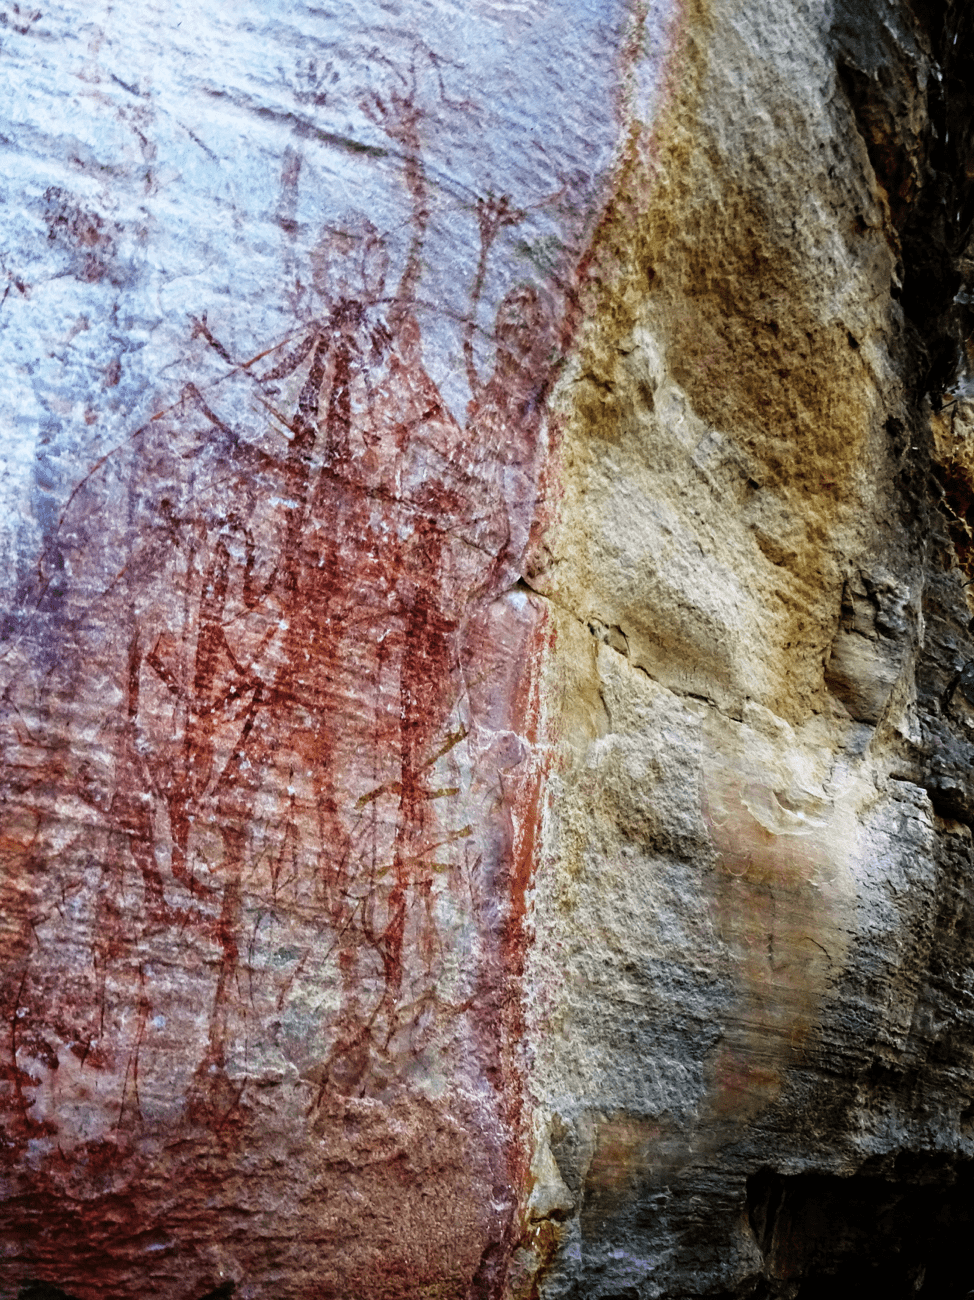 Aboriginal rock art depicting a communal celebration